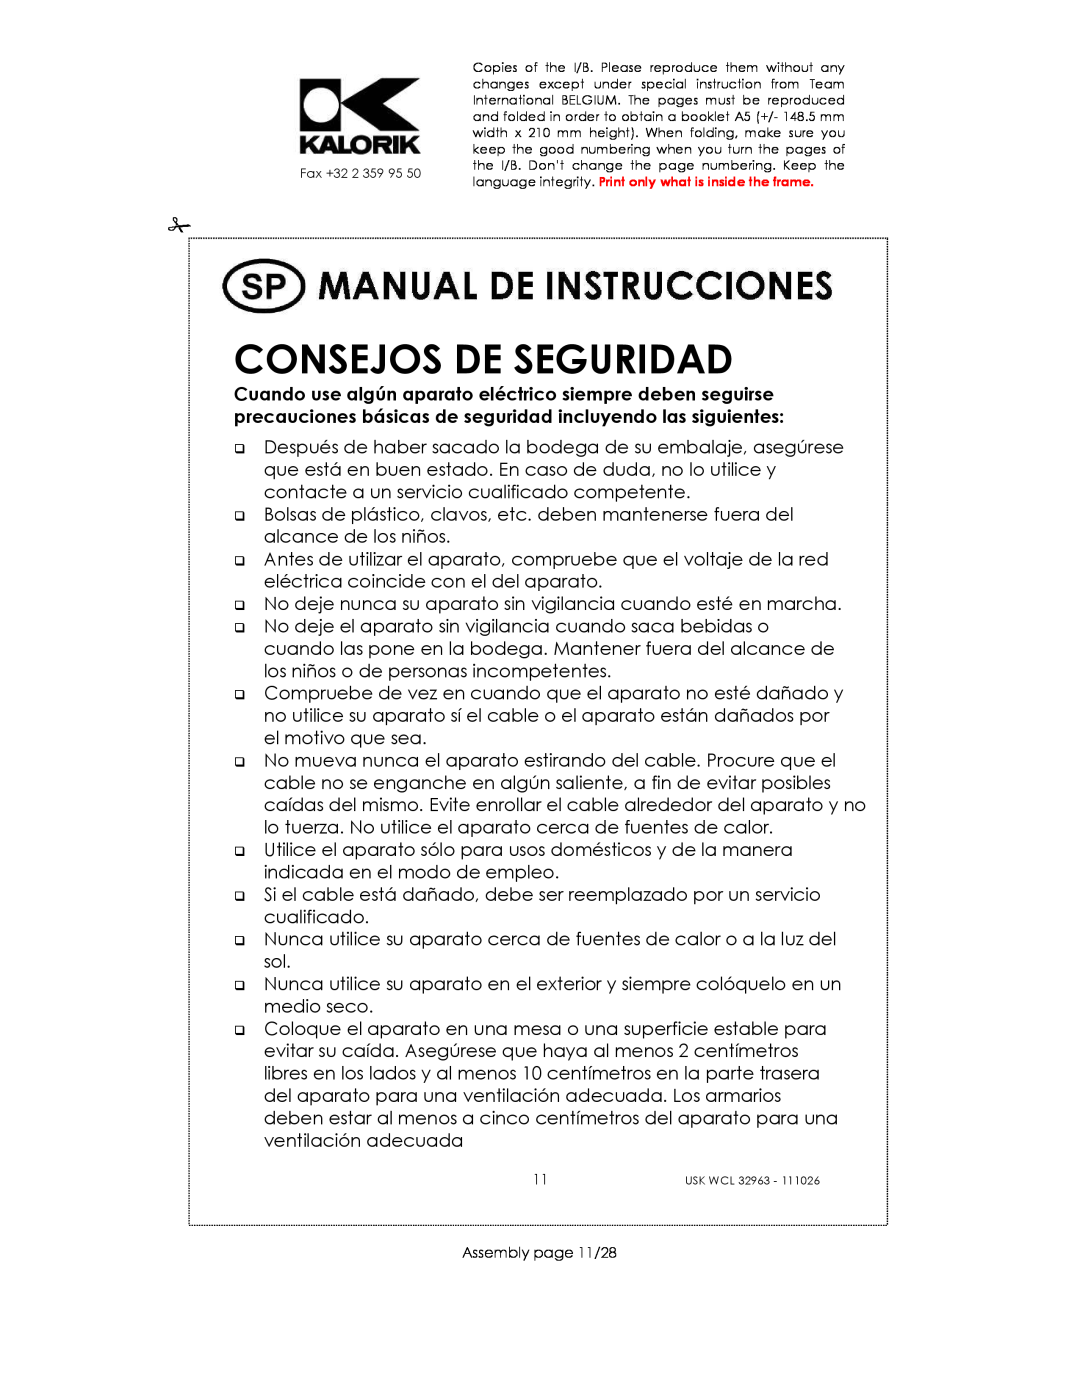 Kalorik USK WCL 32963 manual Consejos De Seguridad, Assembly page 11/28 